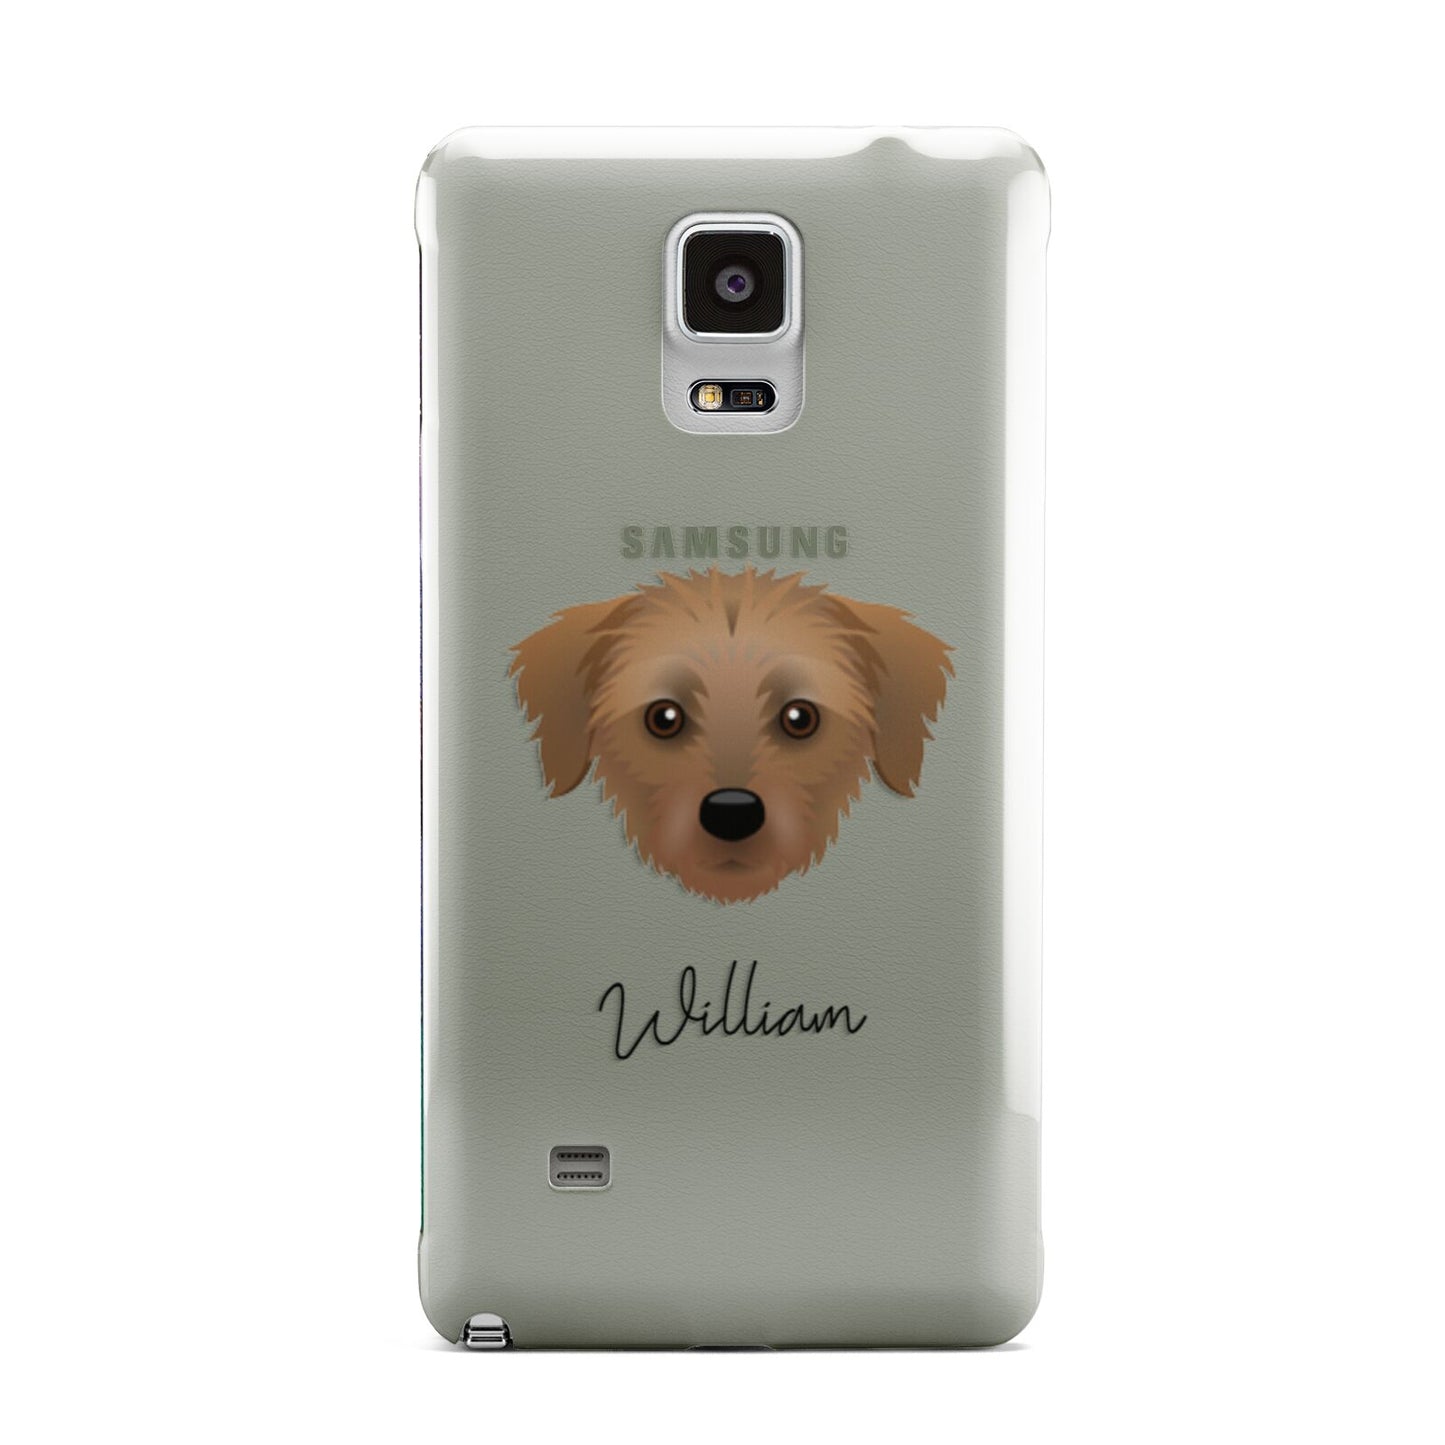 Dorkie Personalised Samsung Galaxy Note 4 Case